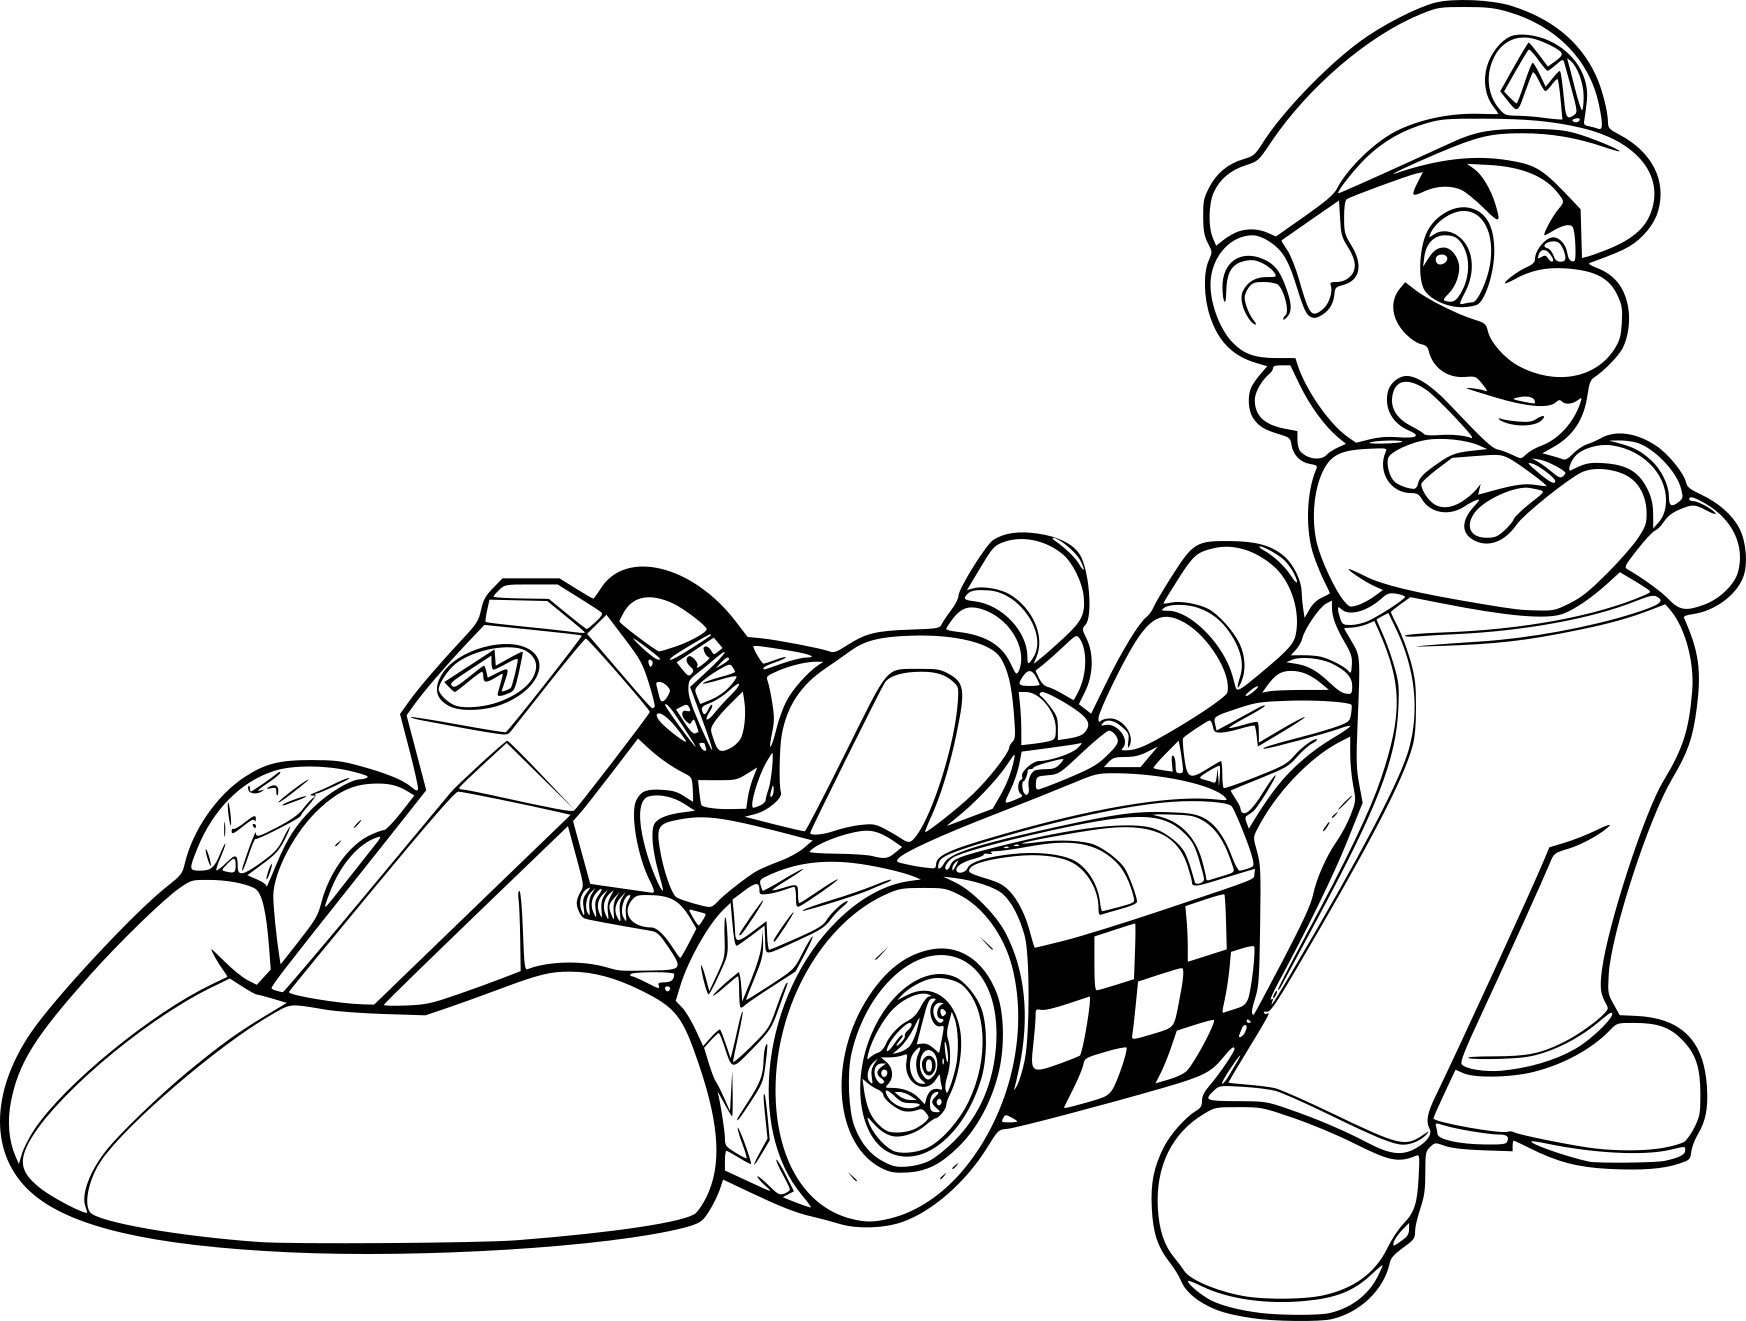 Coloriage Mario dans Mario Kart à imprimer